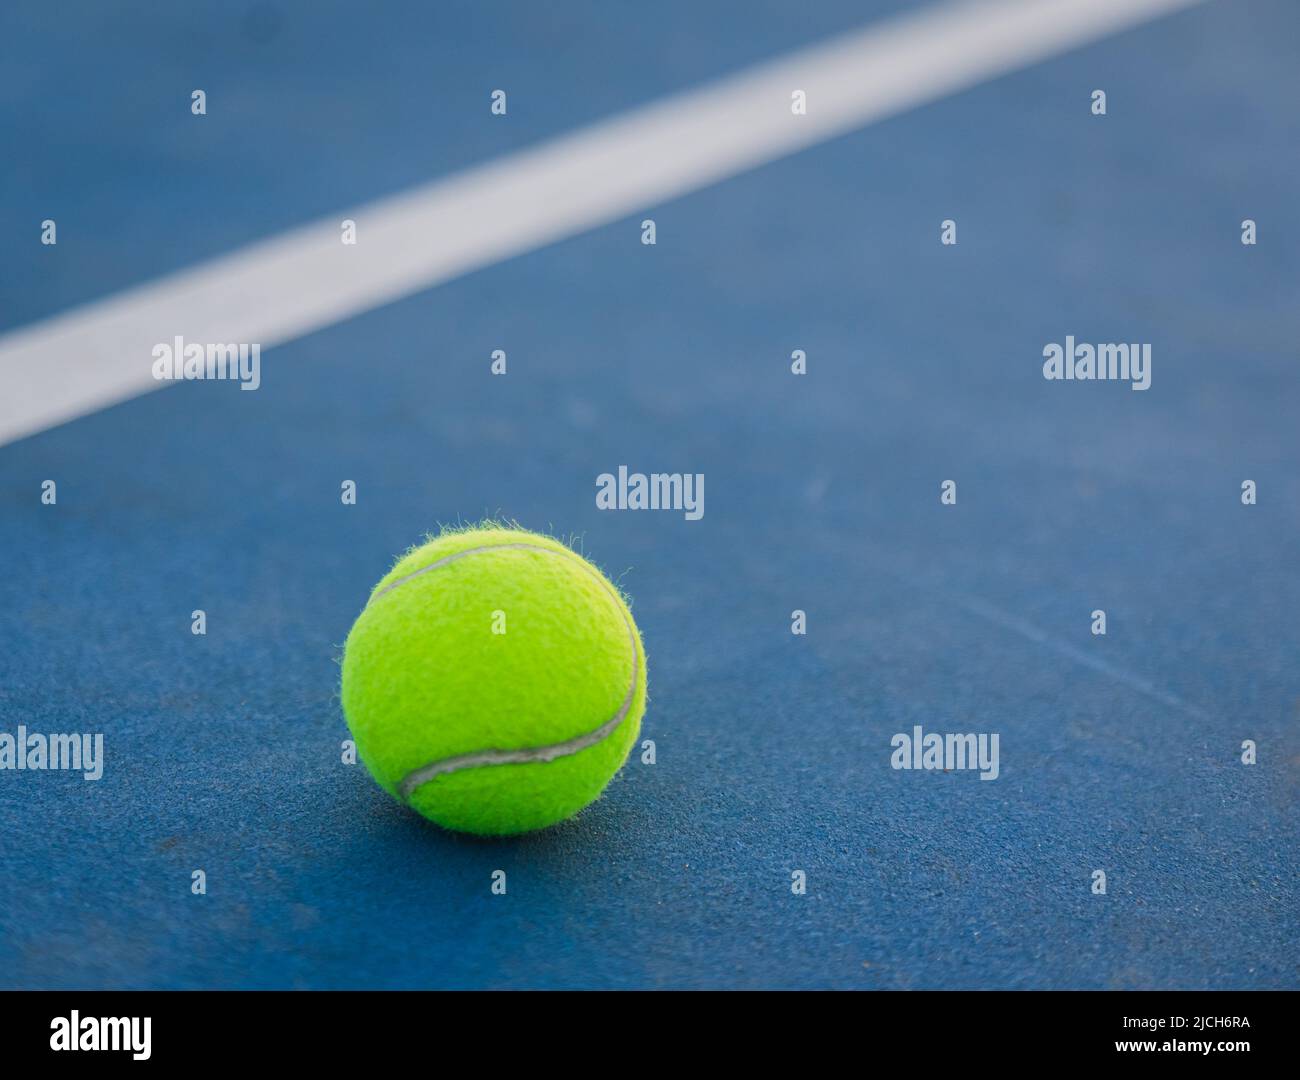 Primer plano de la pelota de tenis amarilla en una cancha dura azul. Foto de stock